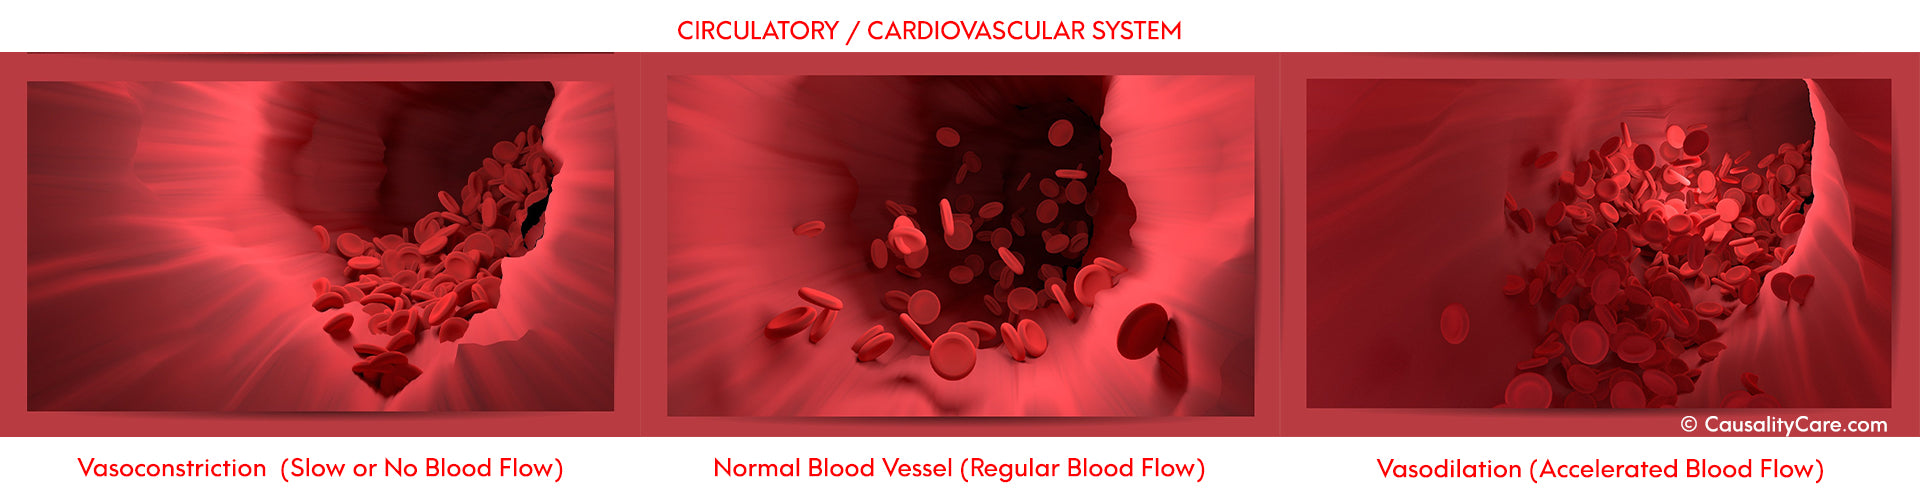 Vasodilation "Cardiovascular System" by CausalityCare.com